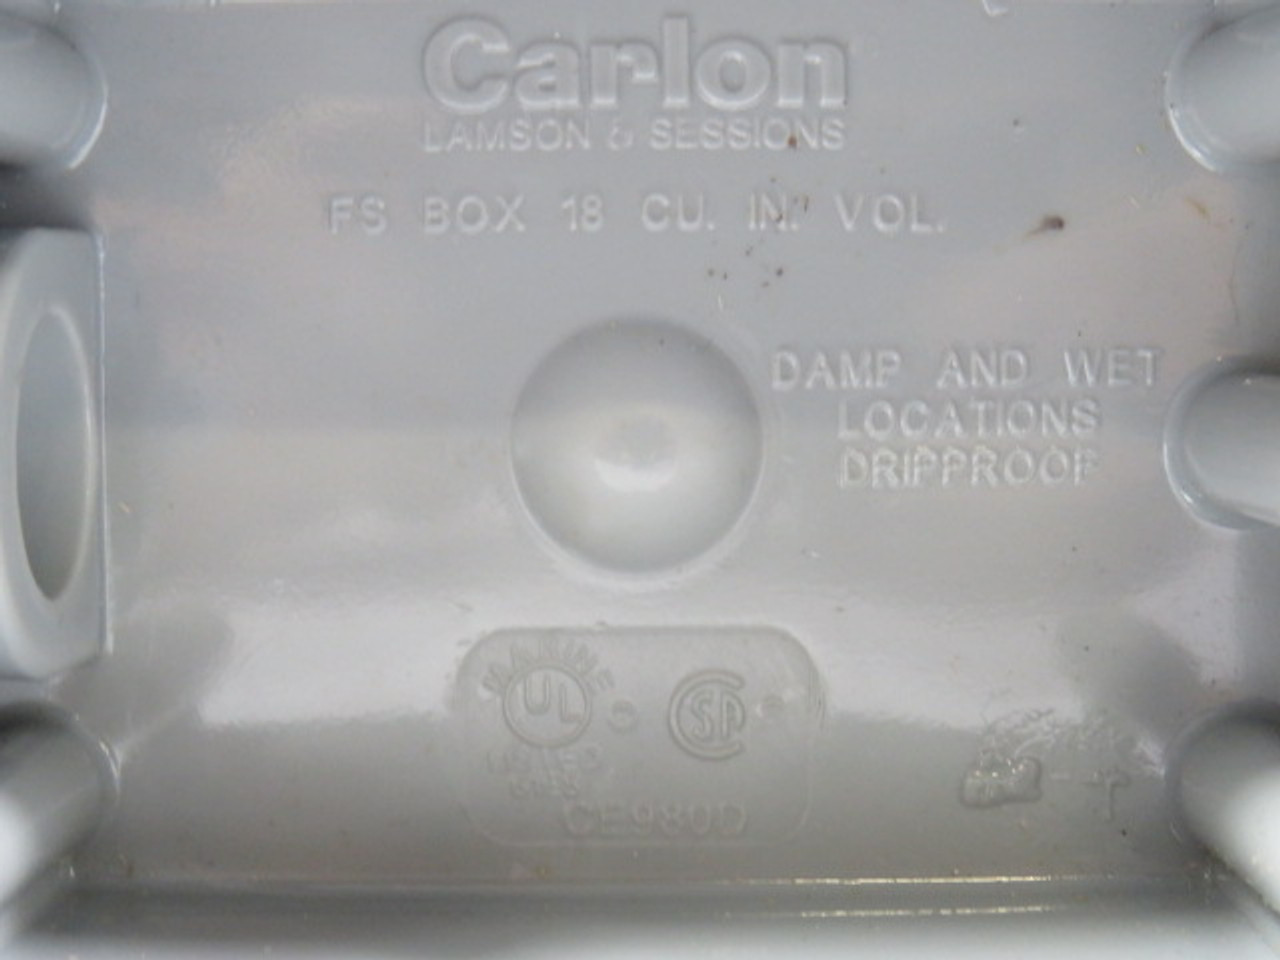 Carlon C980DFN-CTN Electrical Enclosure 1/2" FSE 1 Gang Wp Box 18 CUIN  USED